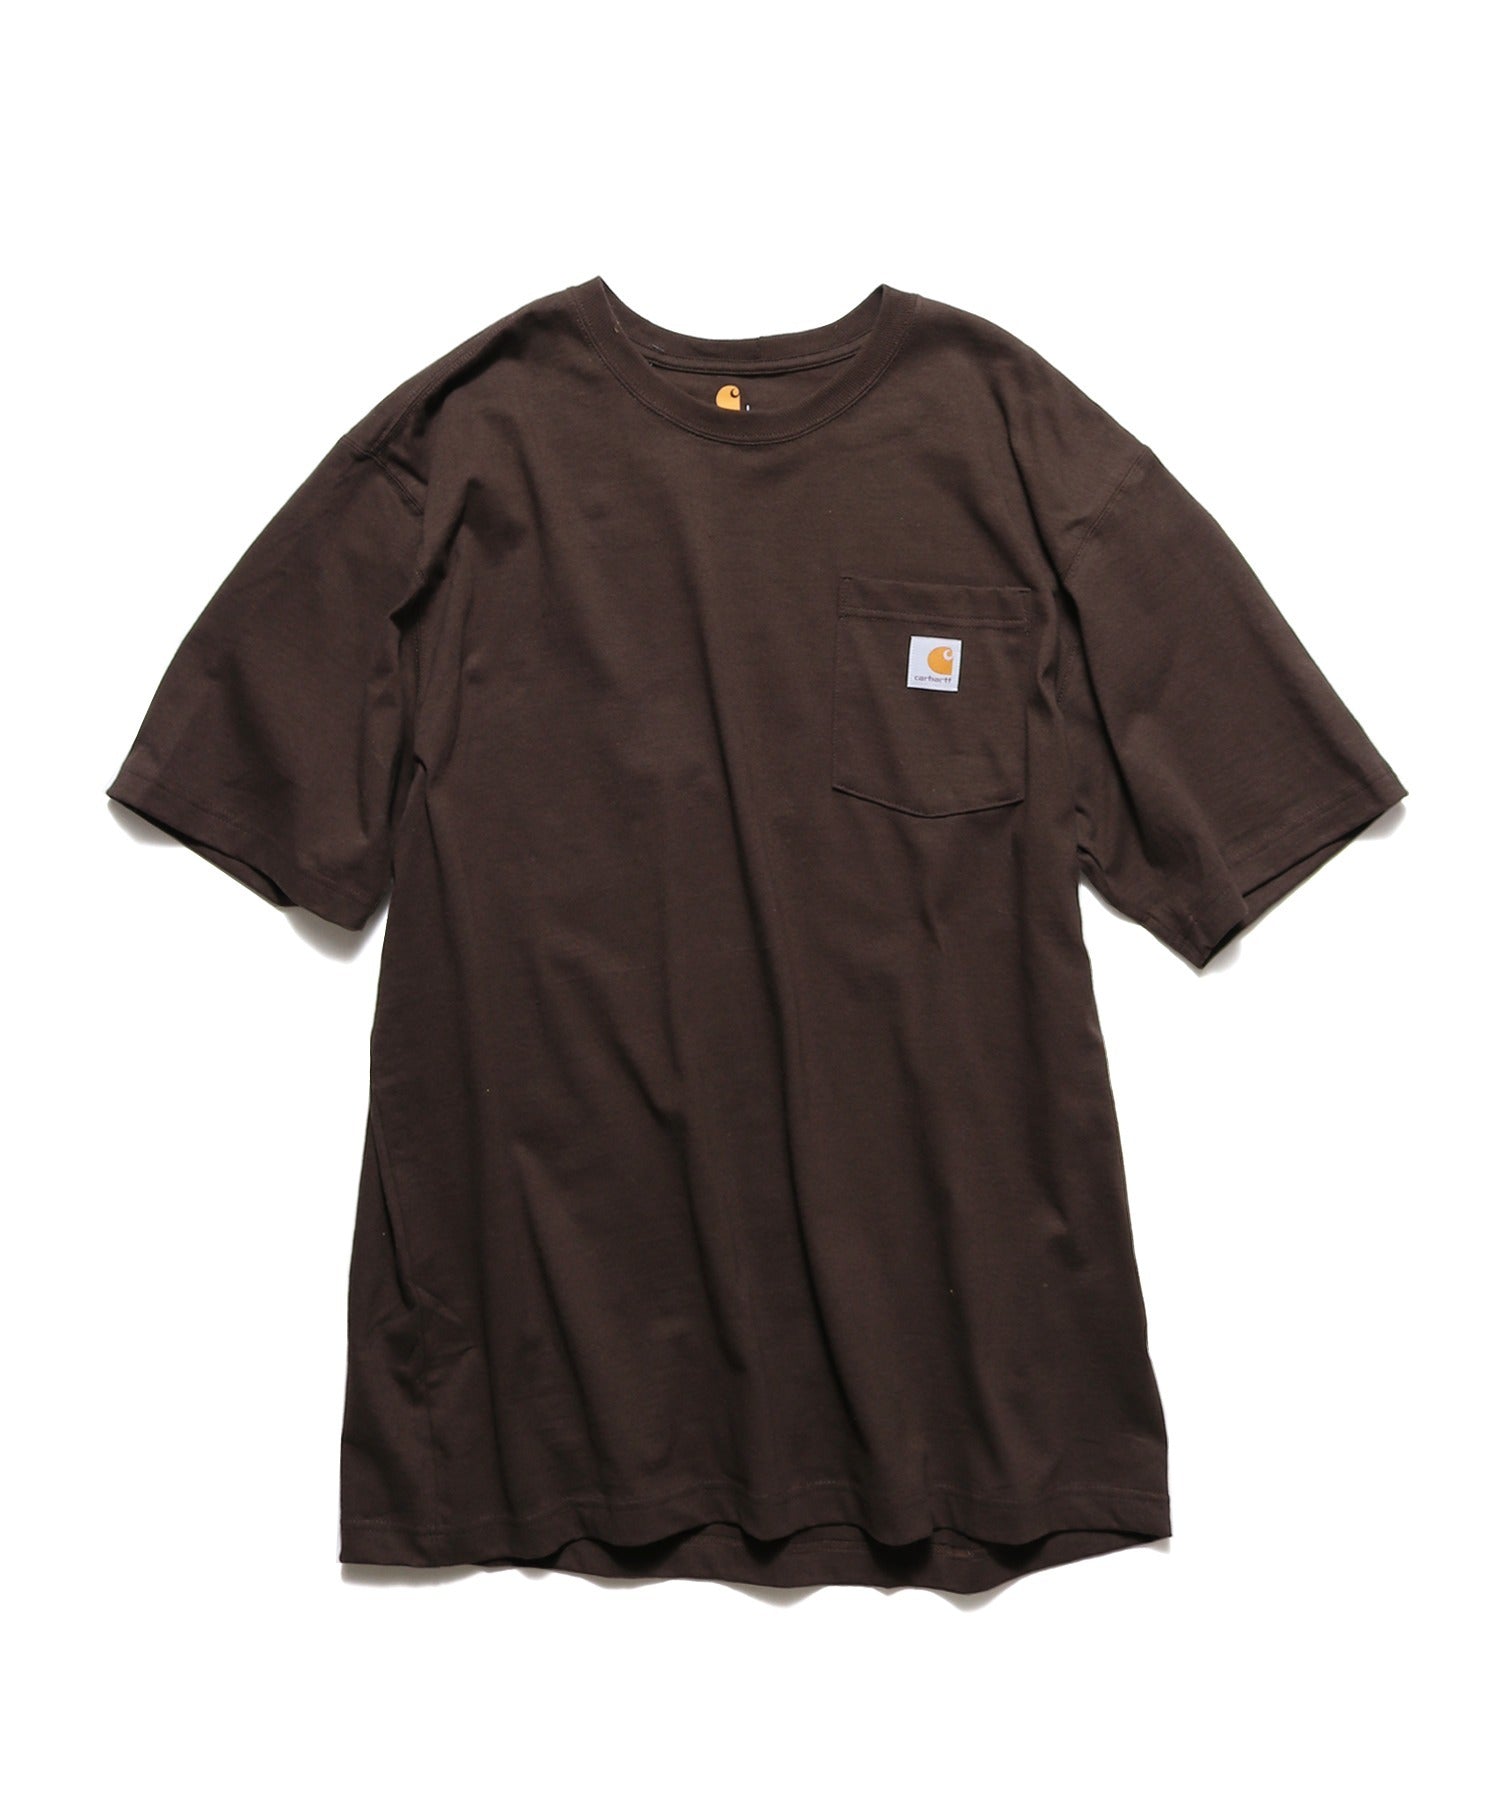 Carhartt/カーハート K87 Workwear Pocket T-Shirt 半袖Tシャツ